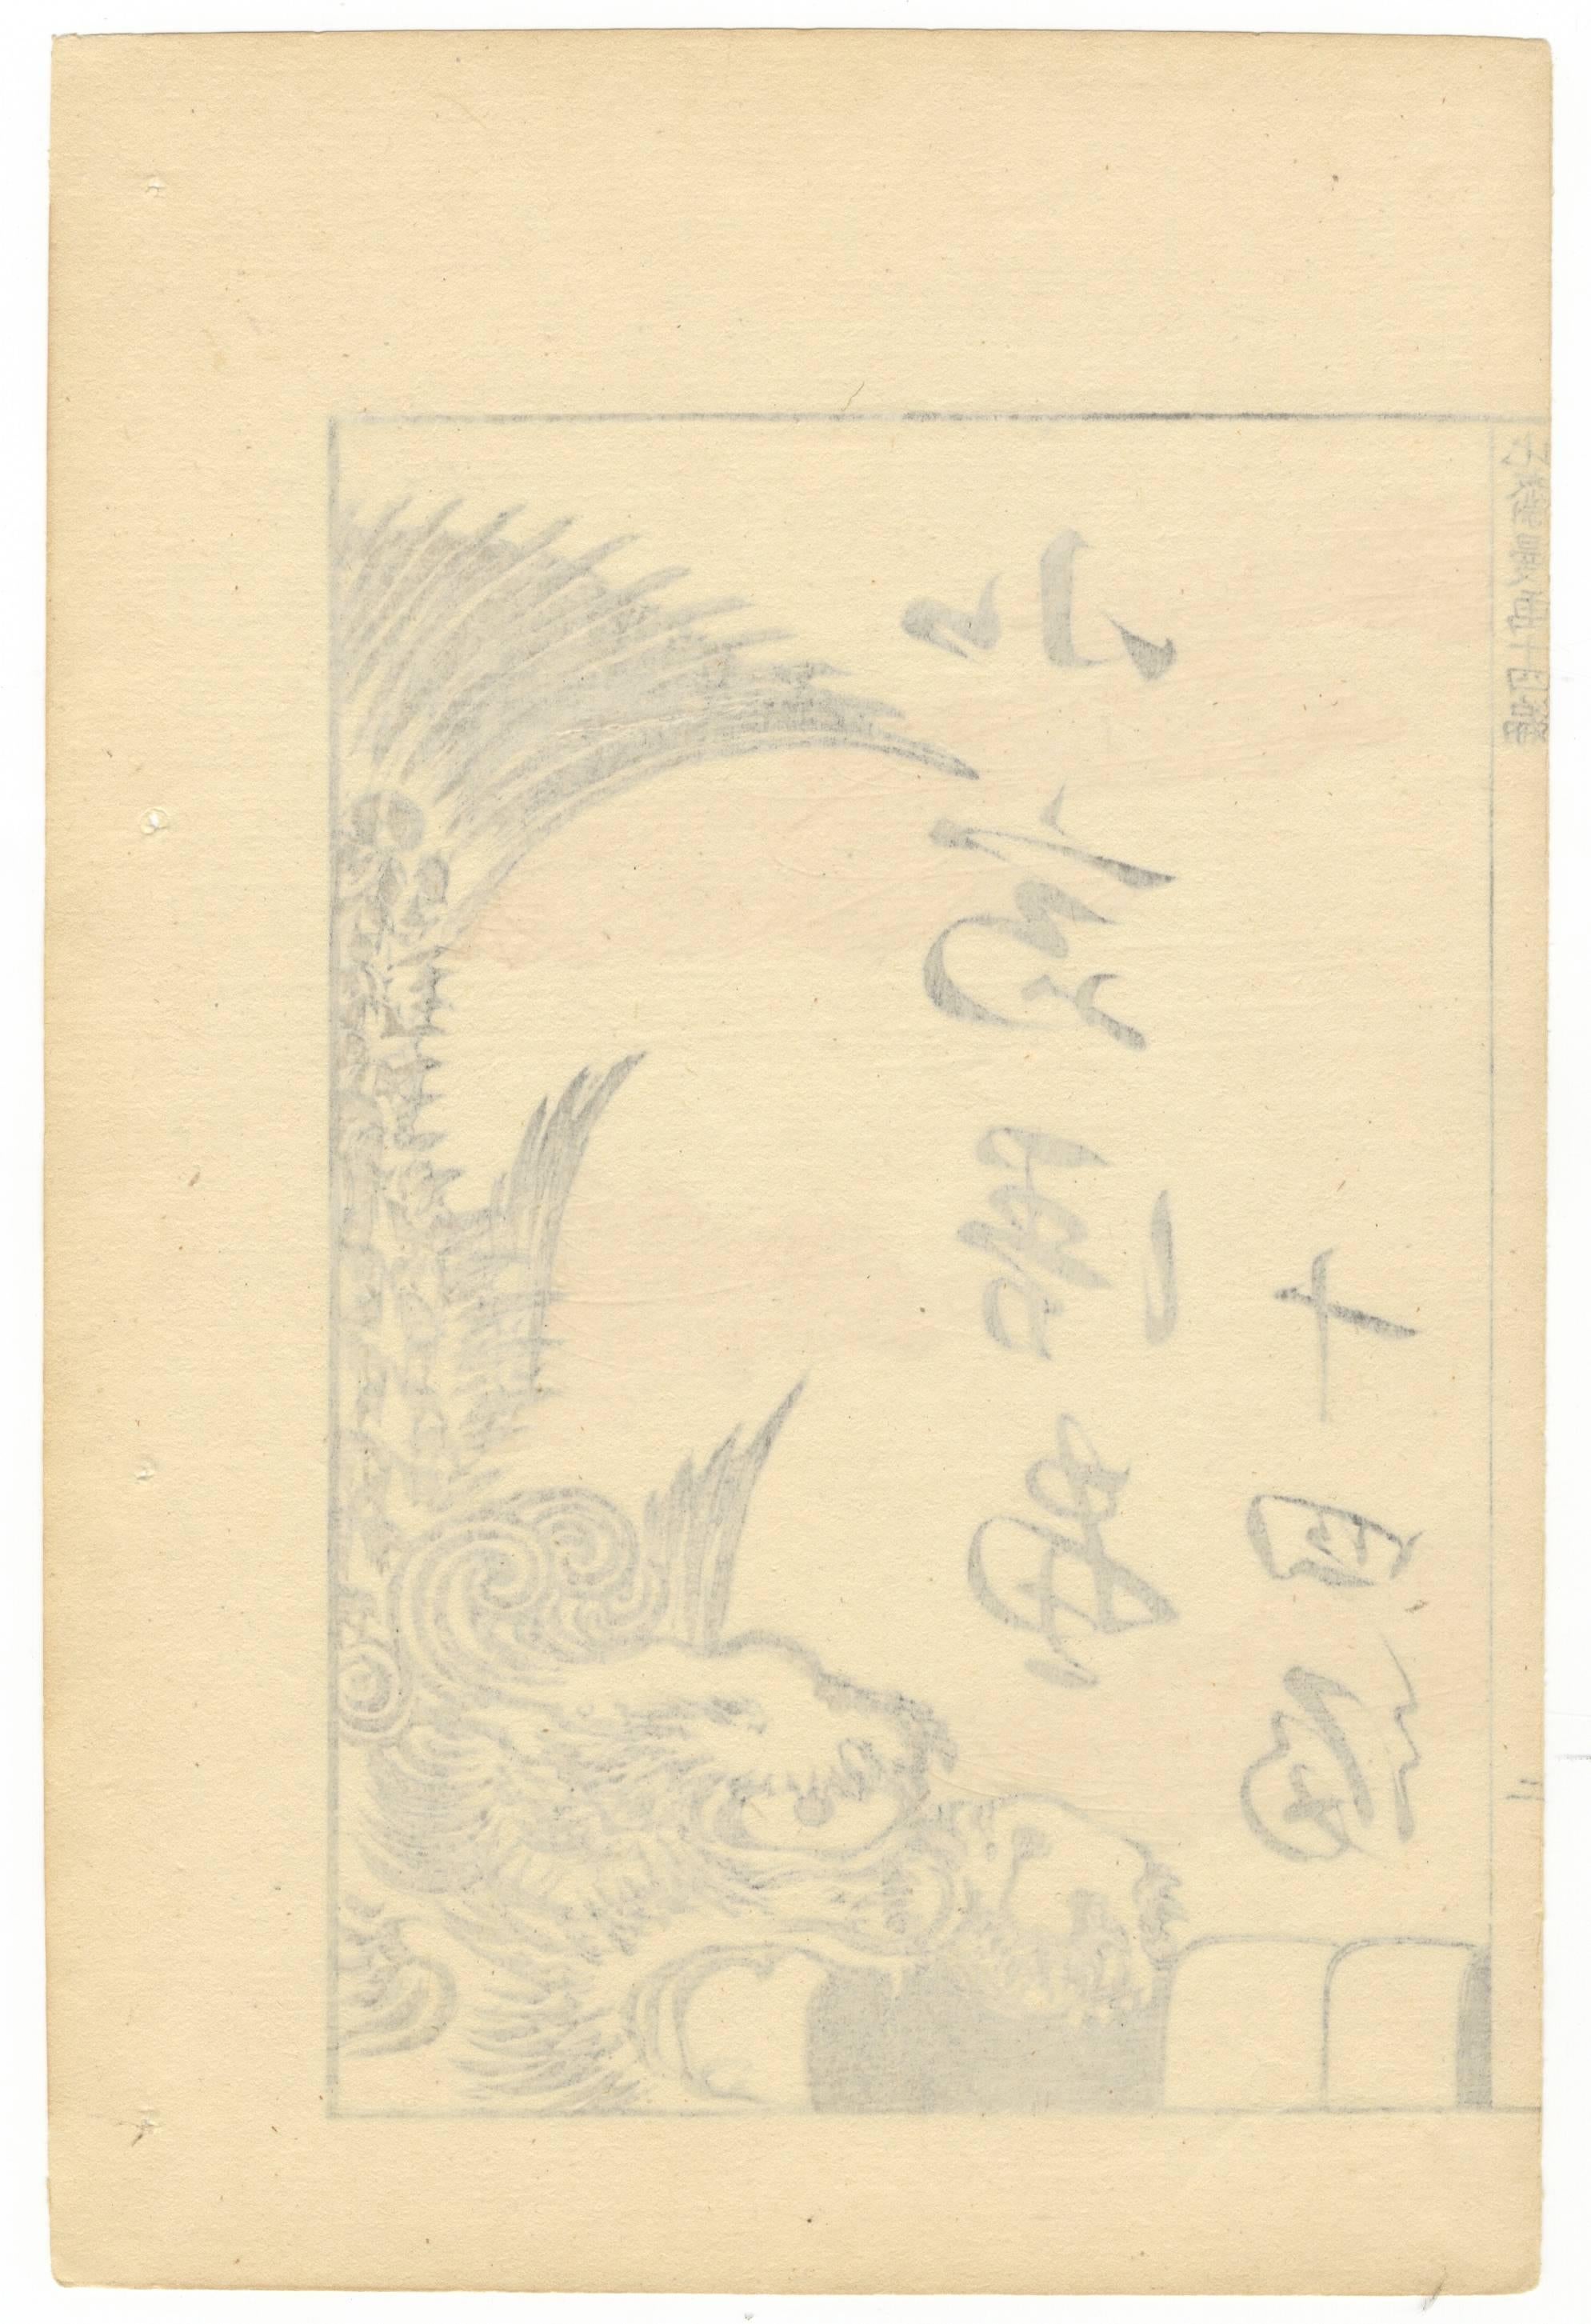 Hand-printed on traditional Japanese washi paper (mulberry tree paper).

Artist: Katsushika Hokusai
Title: Shachihoko
Series: Hokusai Manga Volume 14
Publisher: Toheki-do
Published between 1814-1878

This print is from the Hokusai Manga